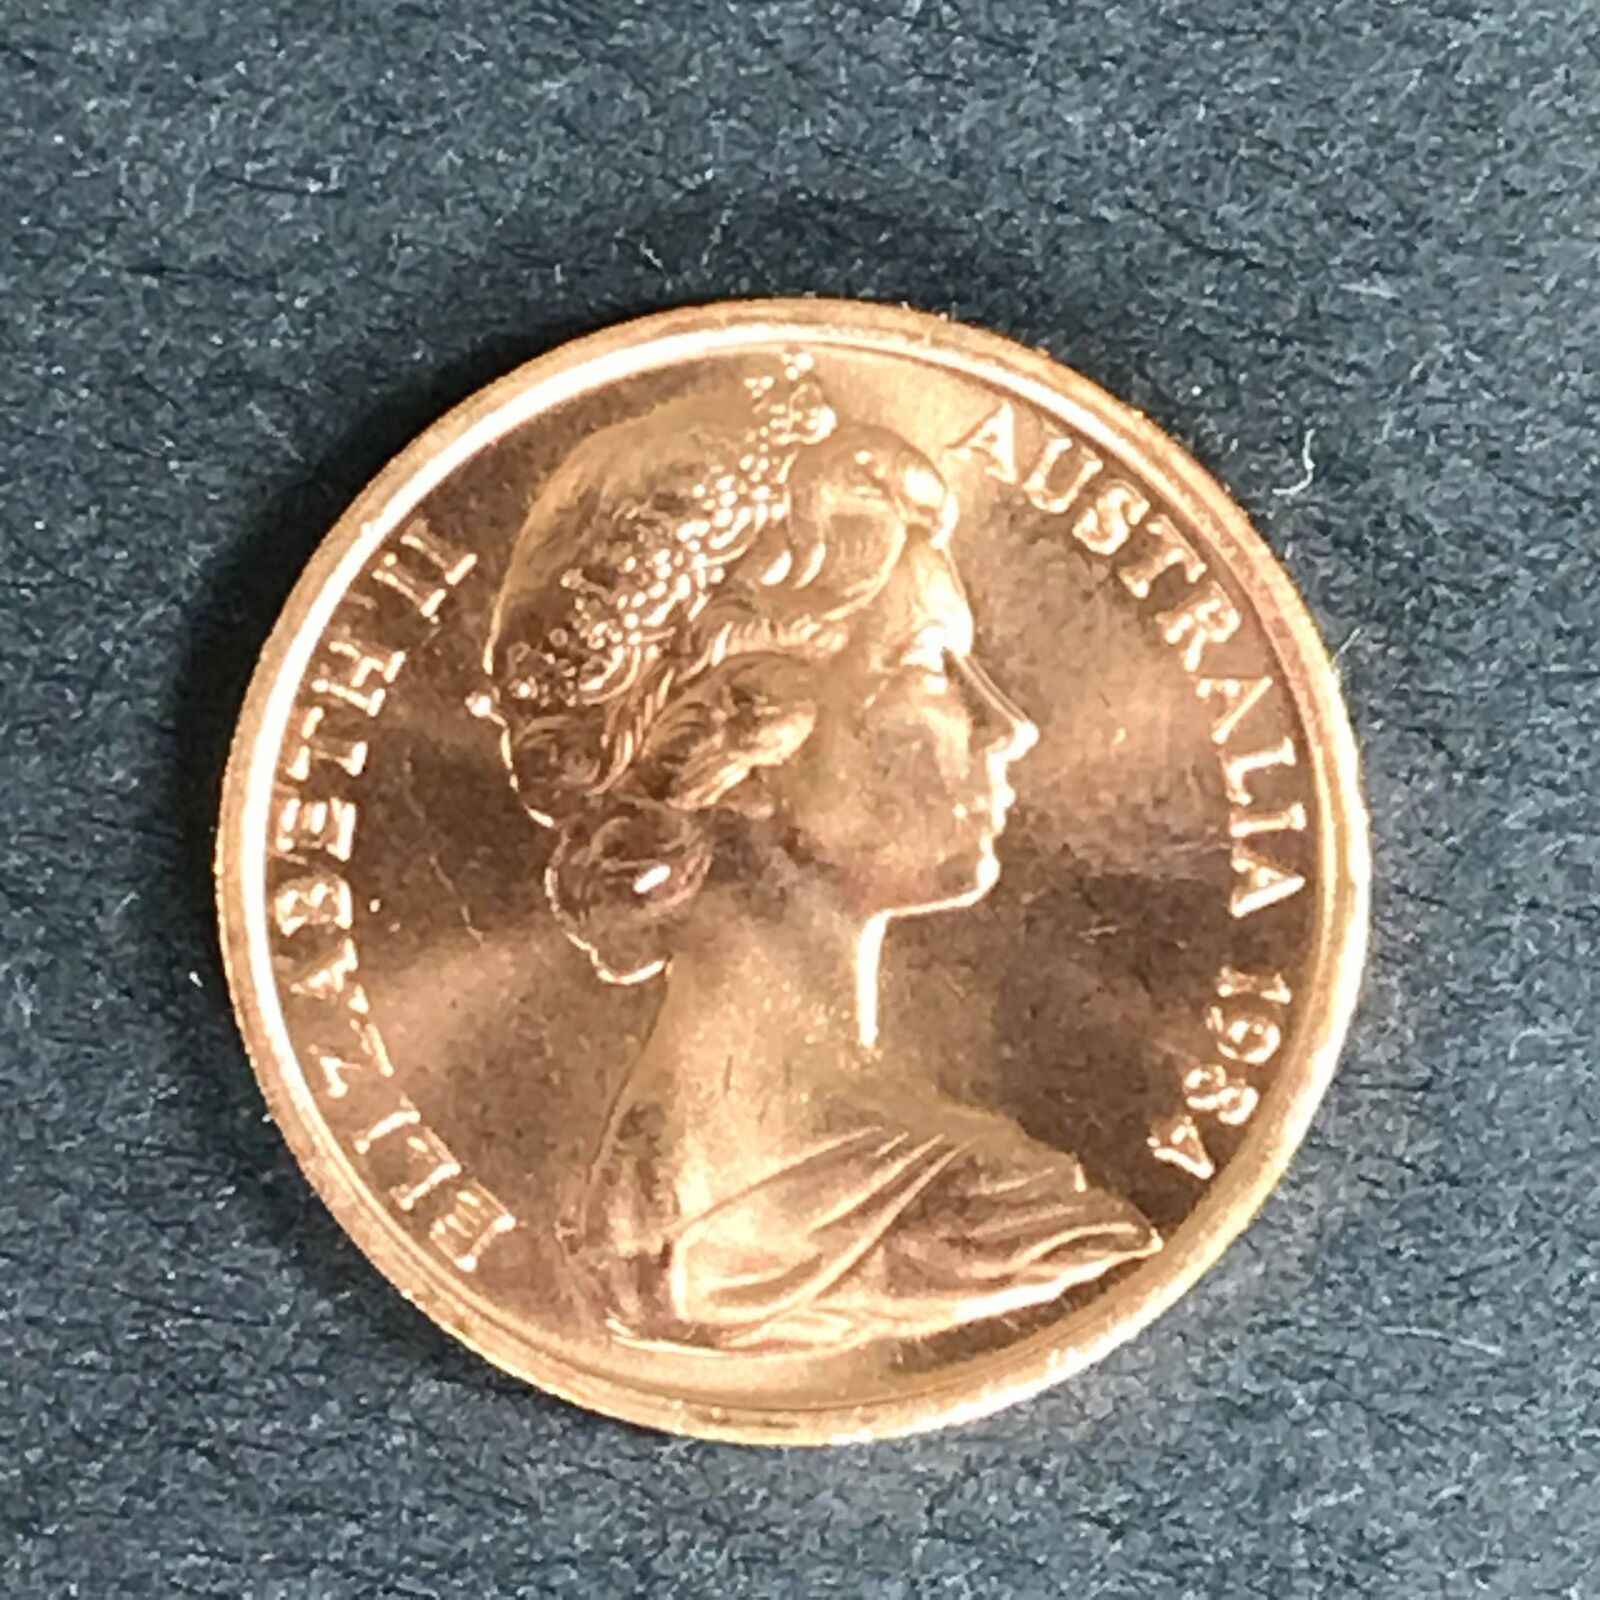 1 x 1984 Uncirculated 1c Royal Australian Mint